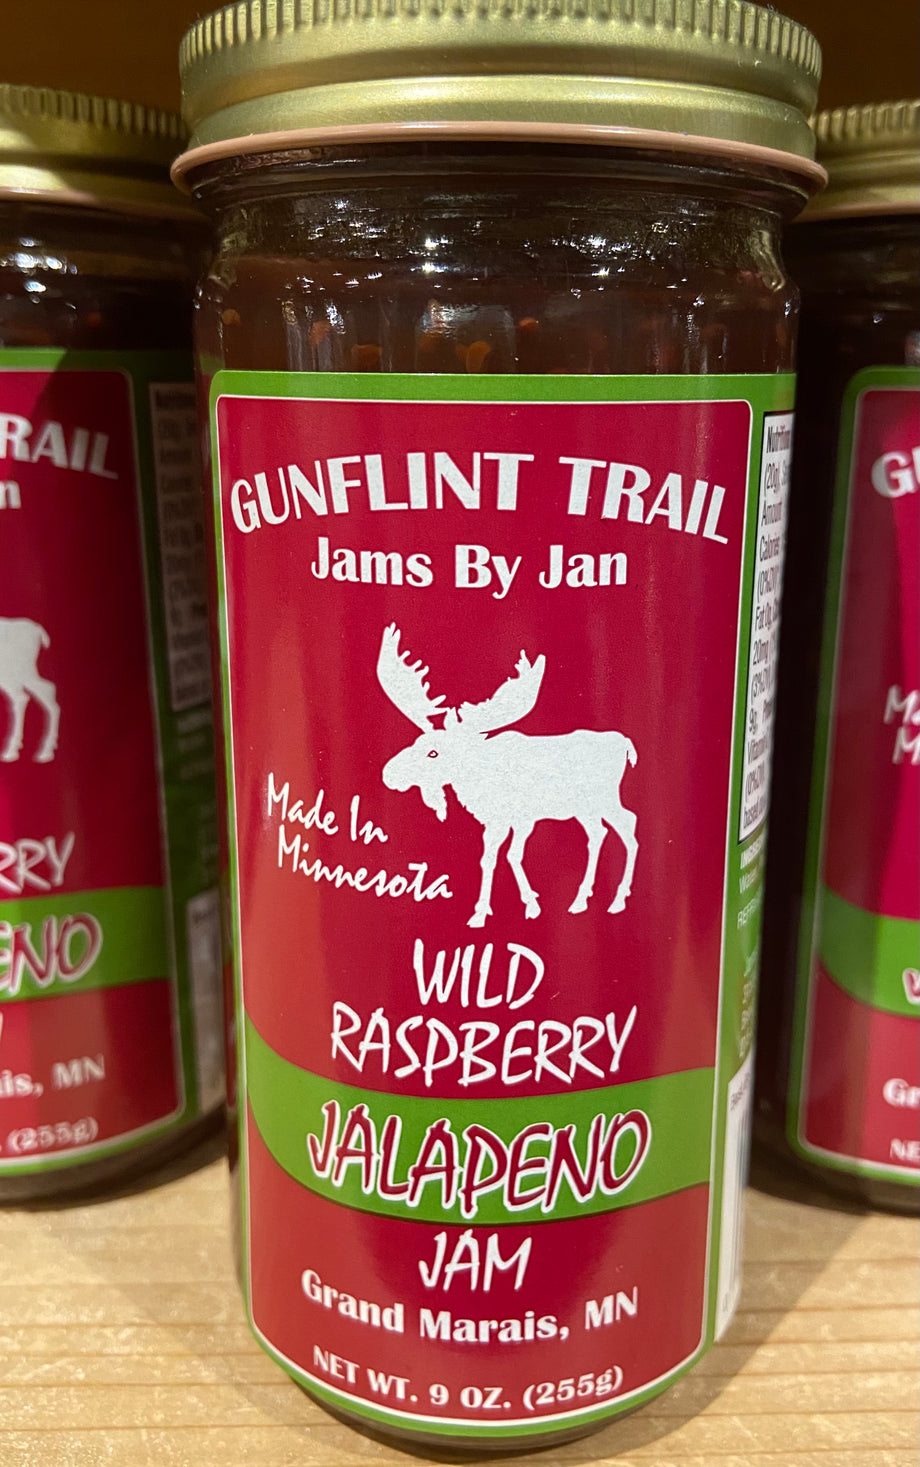 Gunflint Trail Jams by Jan